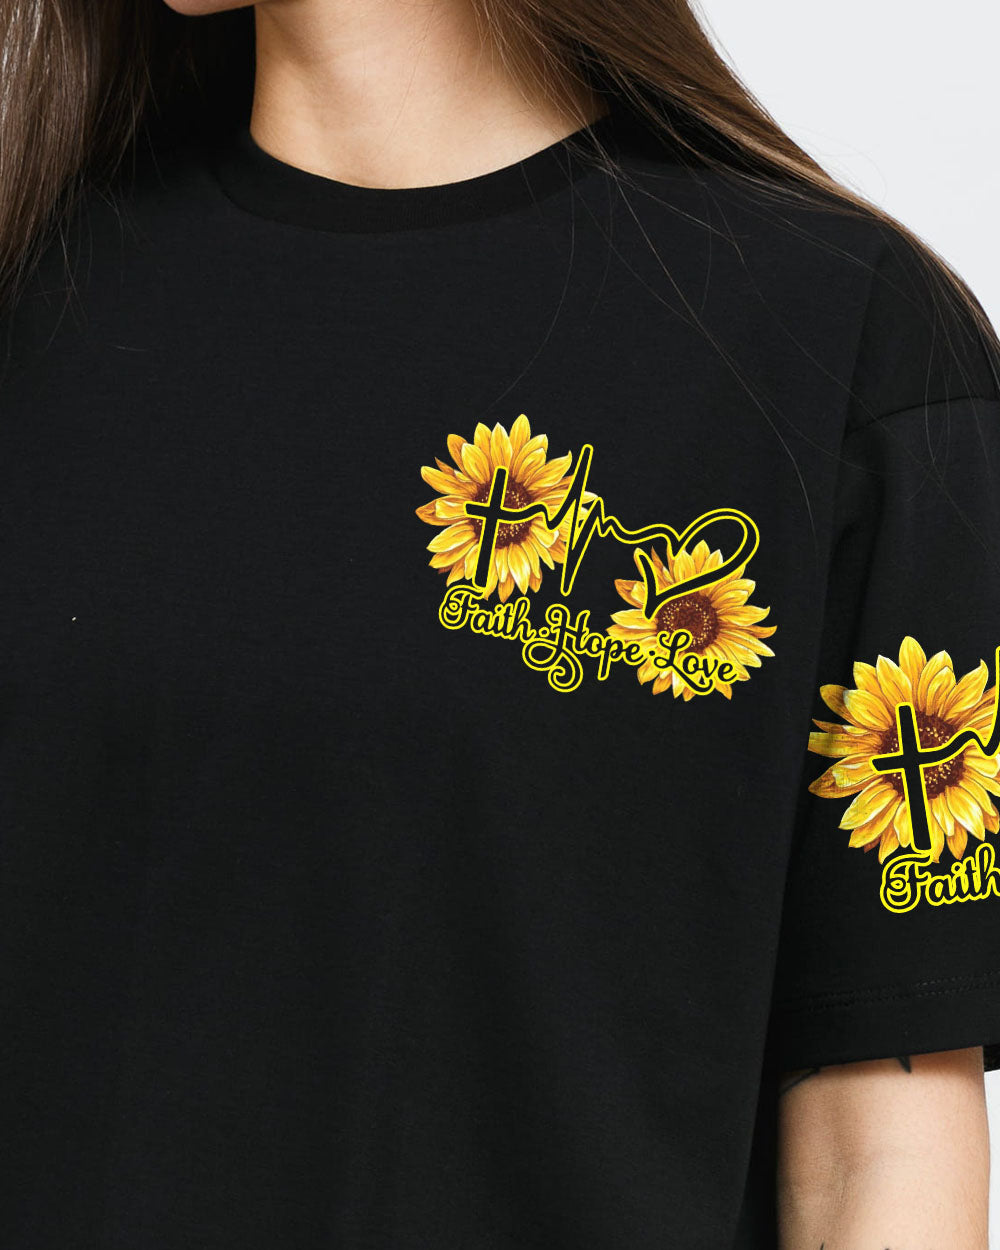 God Says You Are Sunflower Women's Christian Tshirt